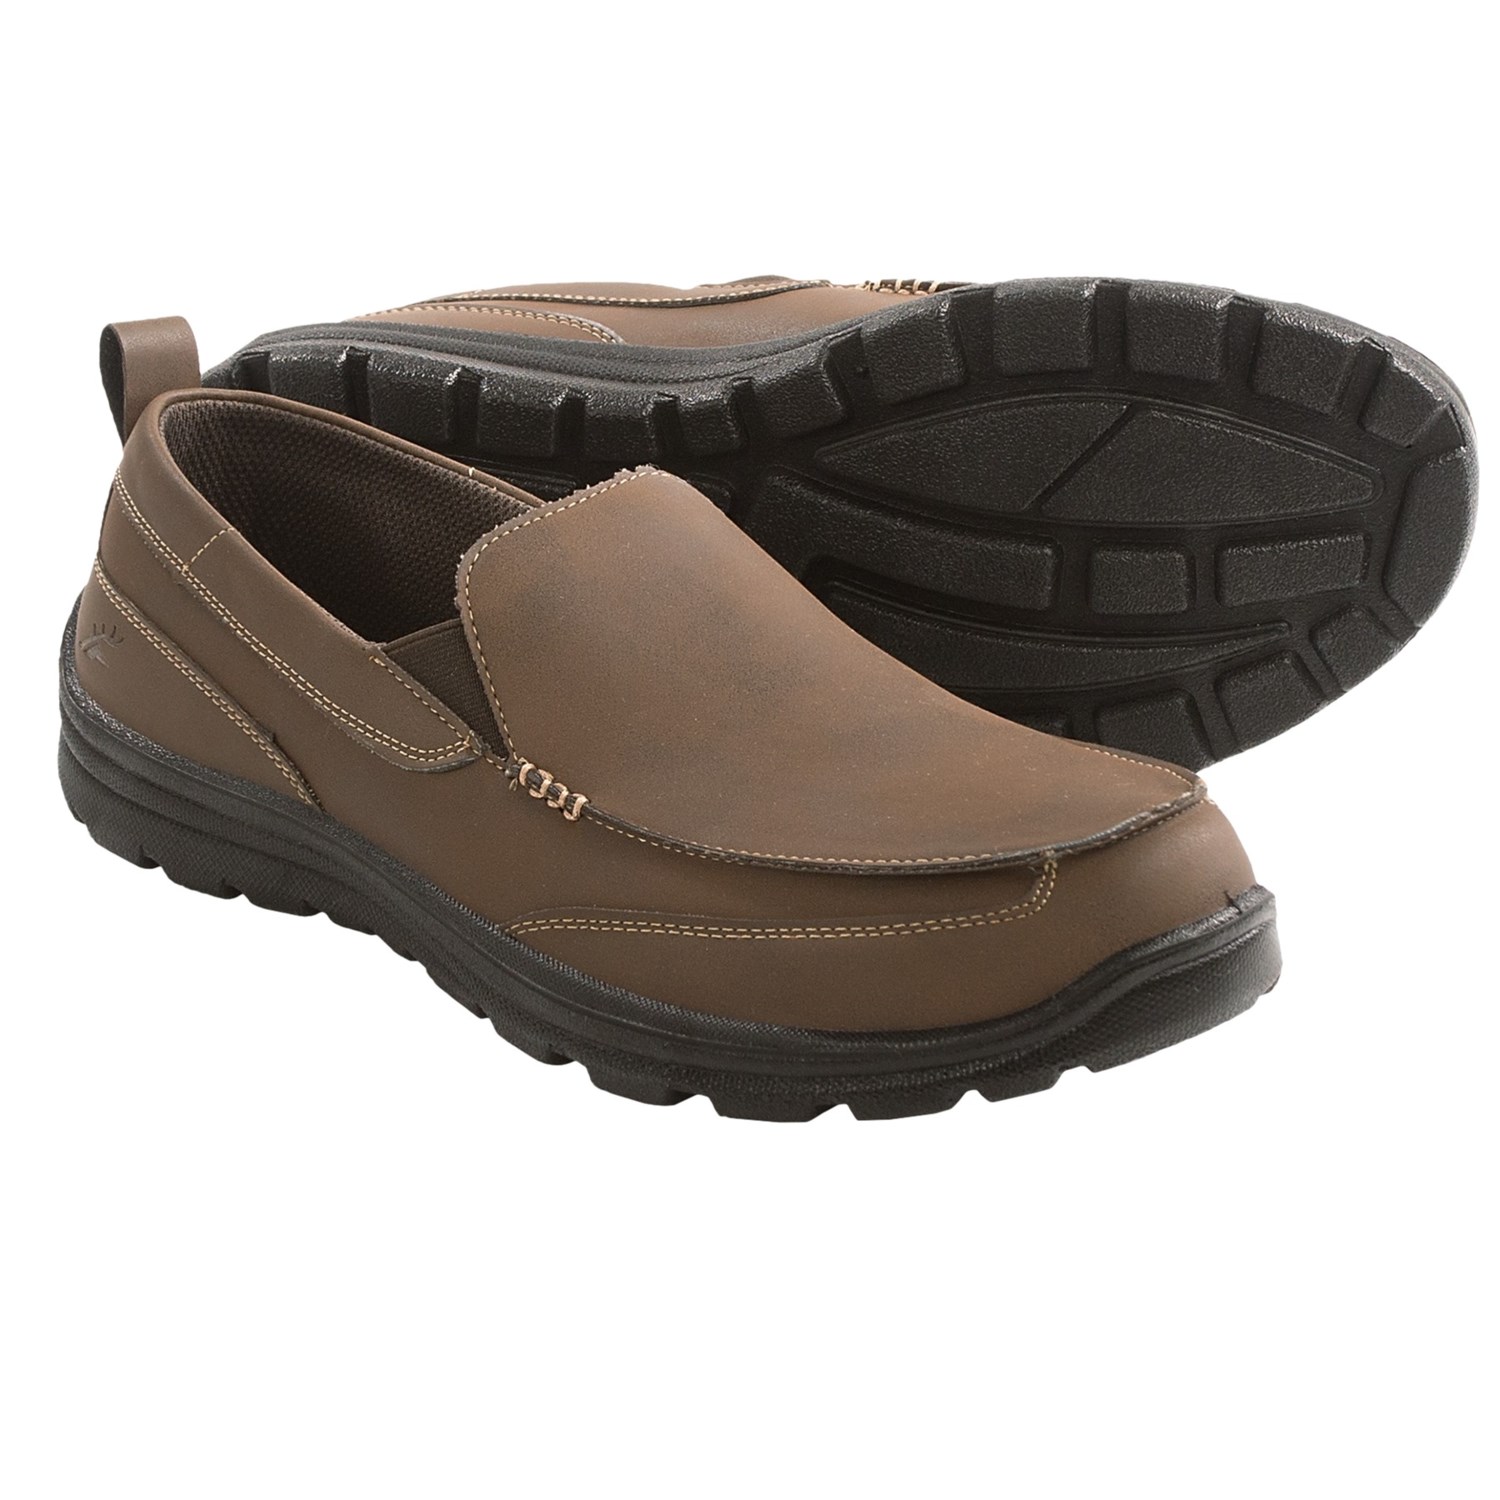 Deer Stags Everest Shoes (For Men) 8512M 61